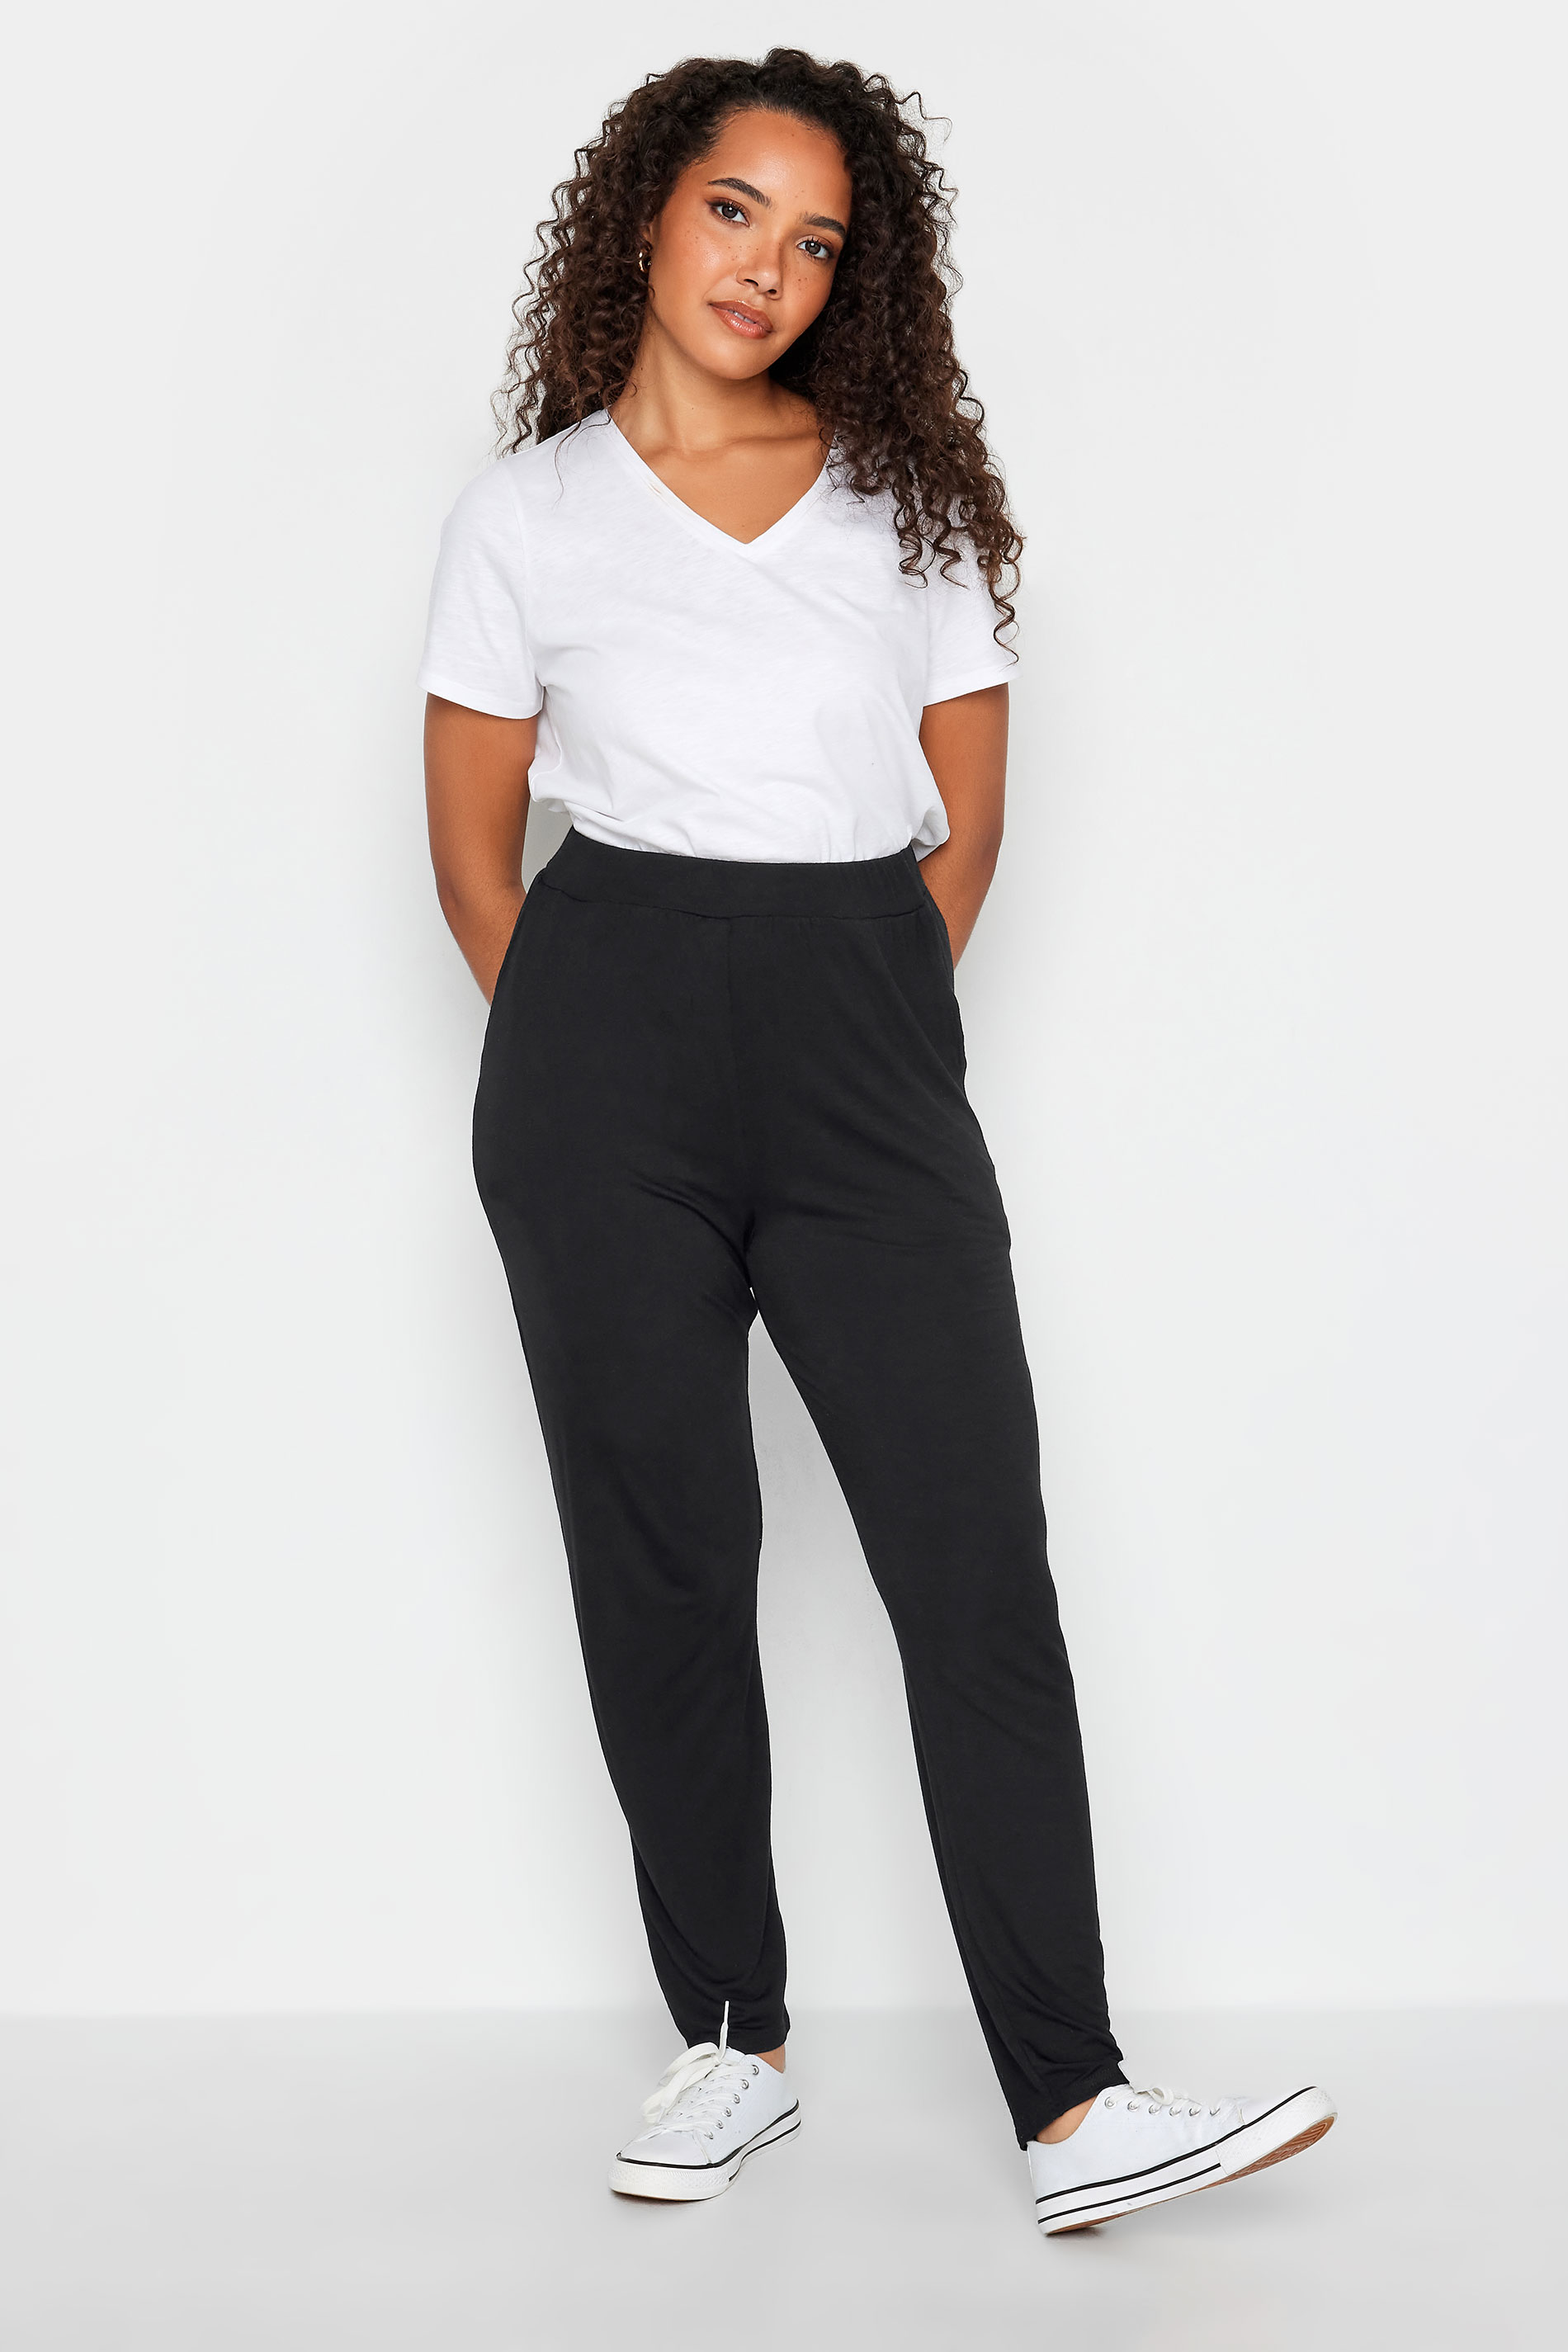 M&Co Black Soft Jersey Hareem Trousers | M&Co 2